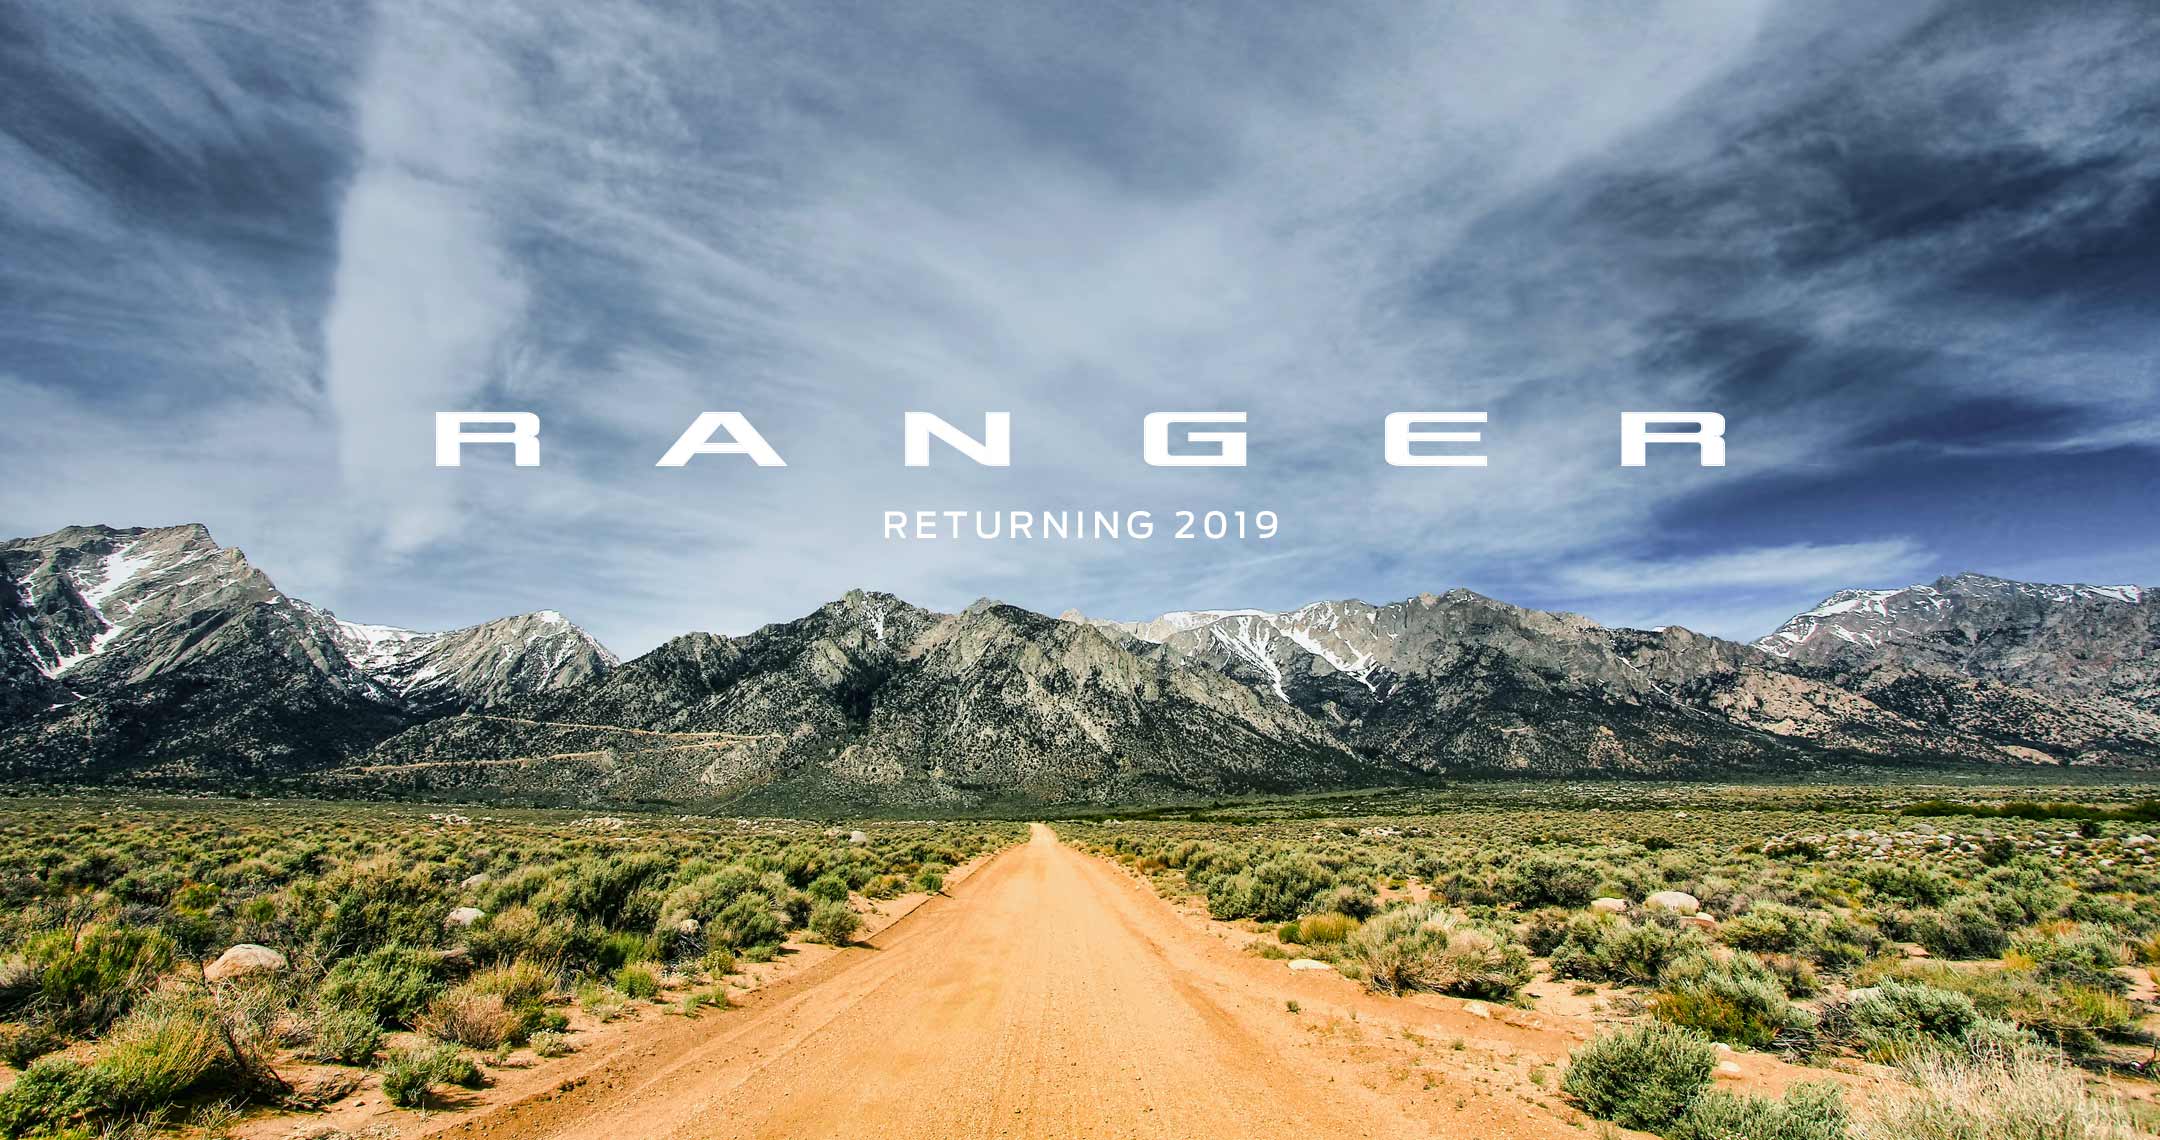 New Ford Ranger - Returning to Chandler in 2019